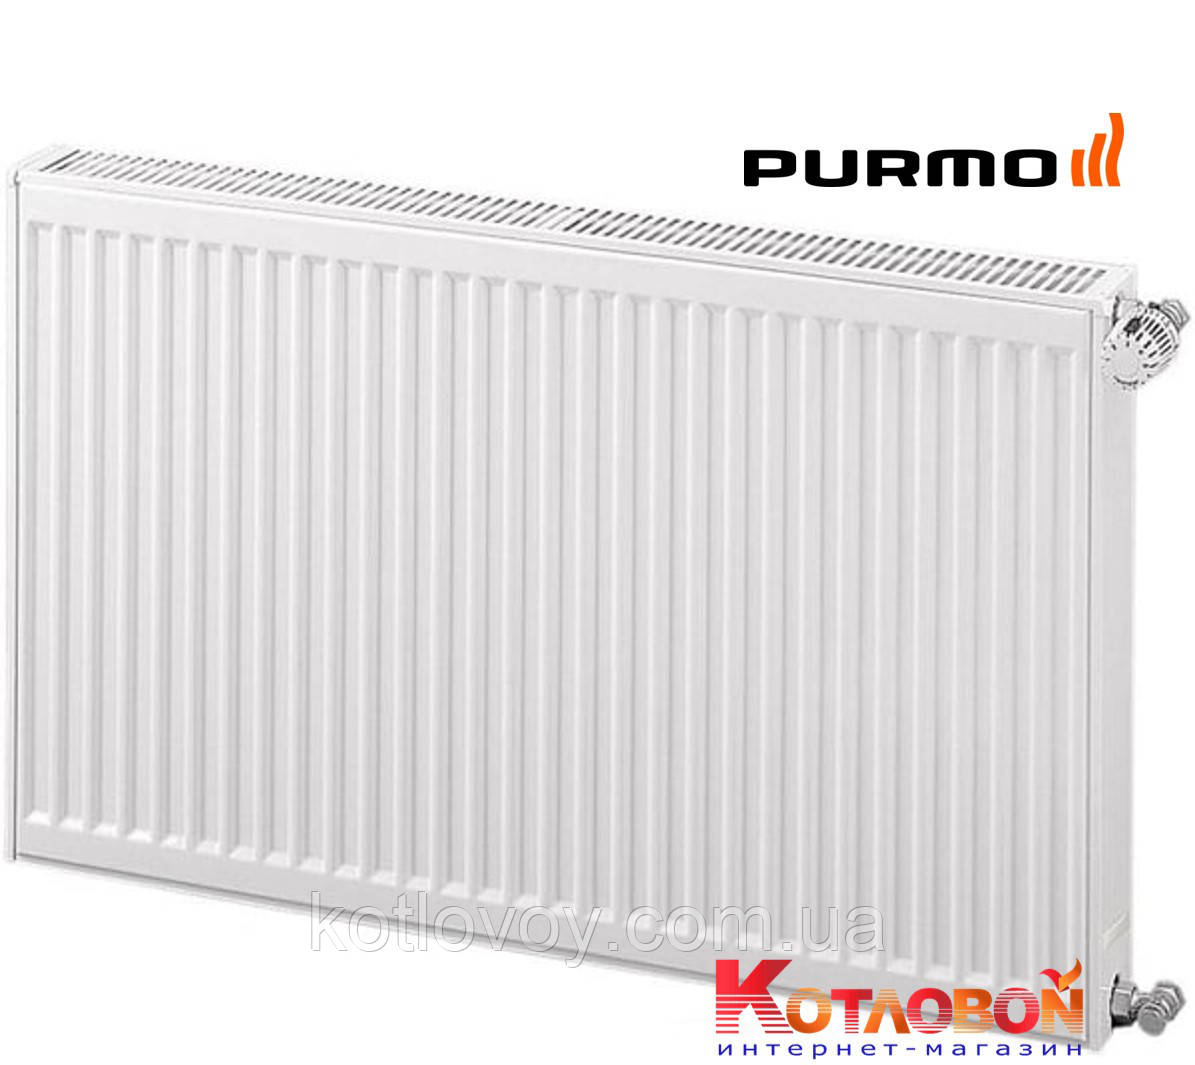 Сталеві радіатори PURMO Compact (Пурмо Компакт)